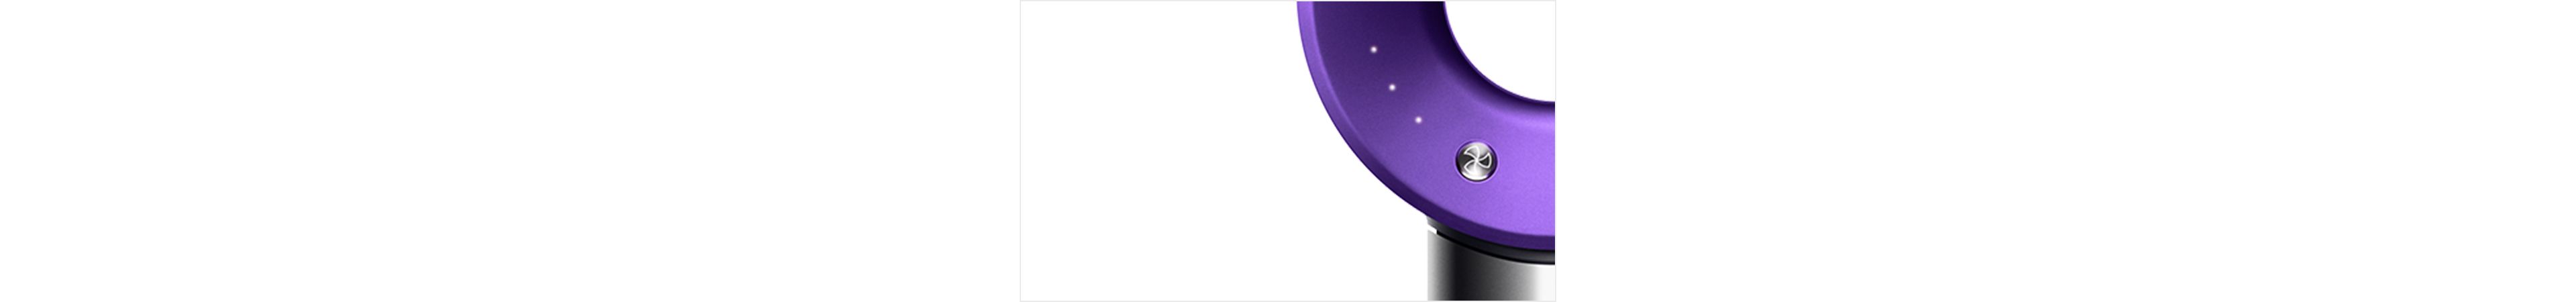 Dyson Supersonic Hair Dryer, Black/Purple - wide 5